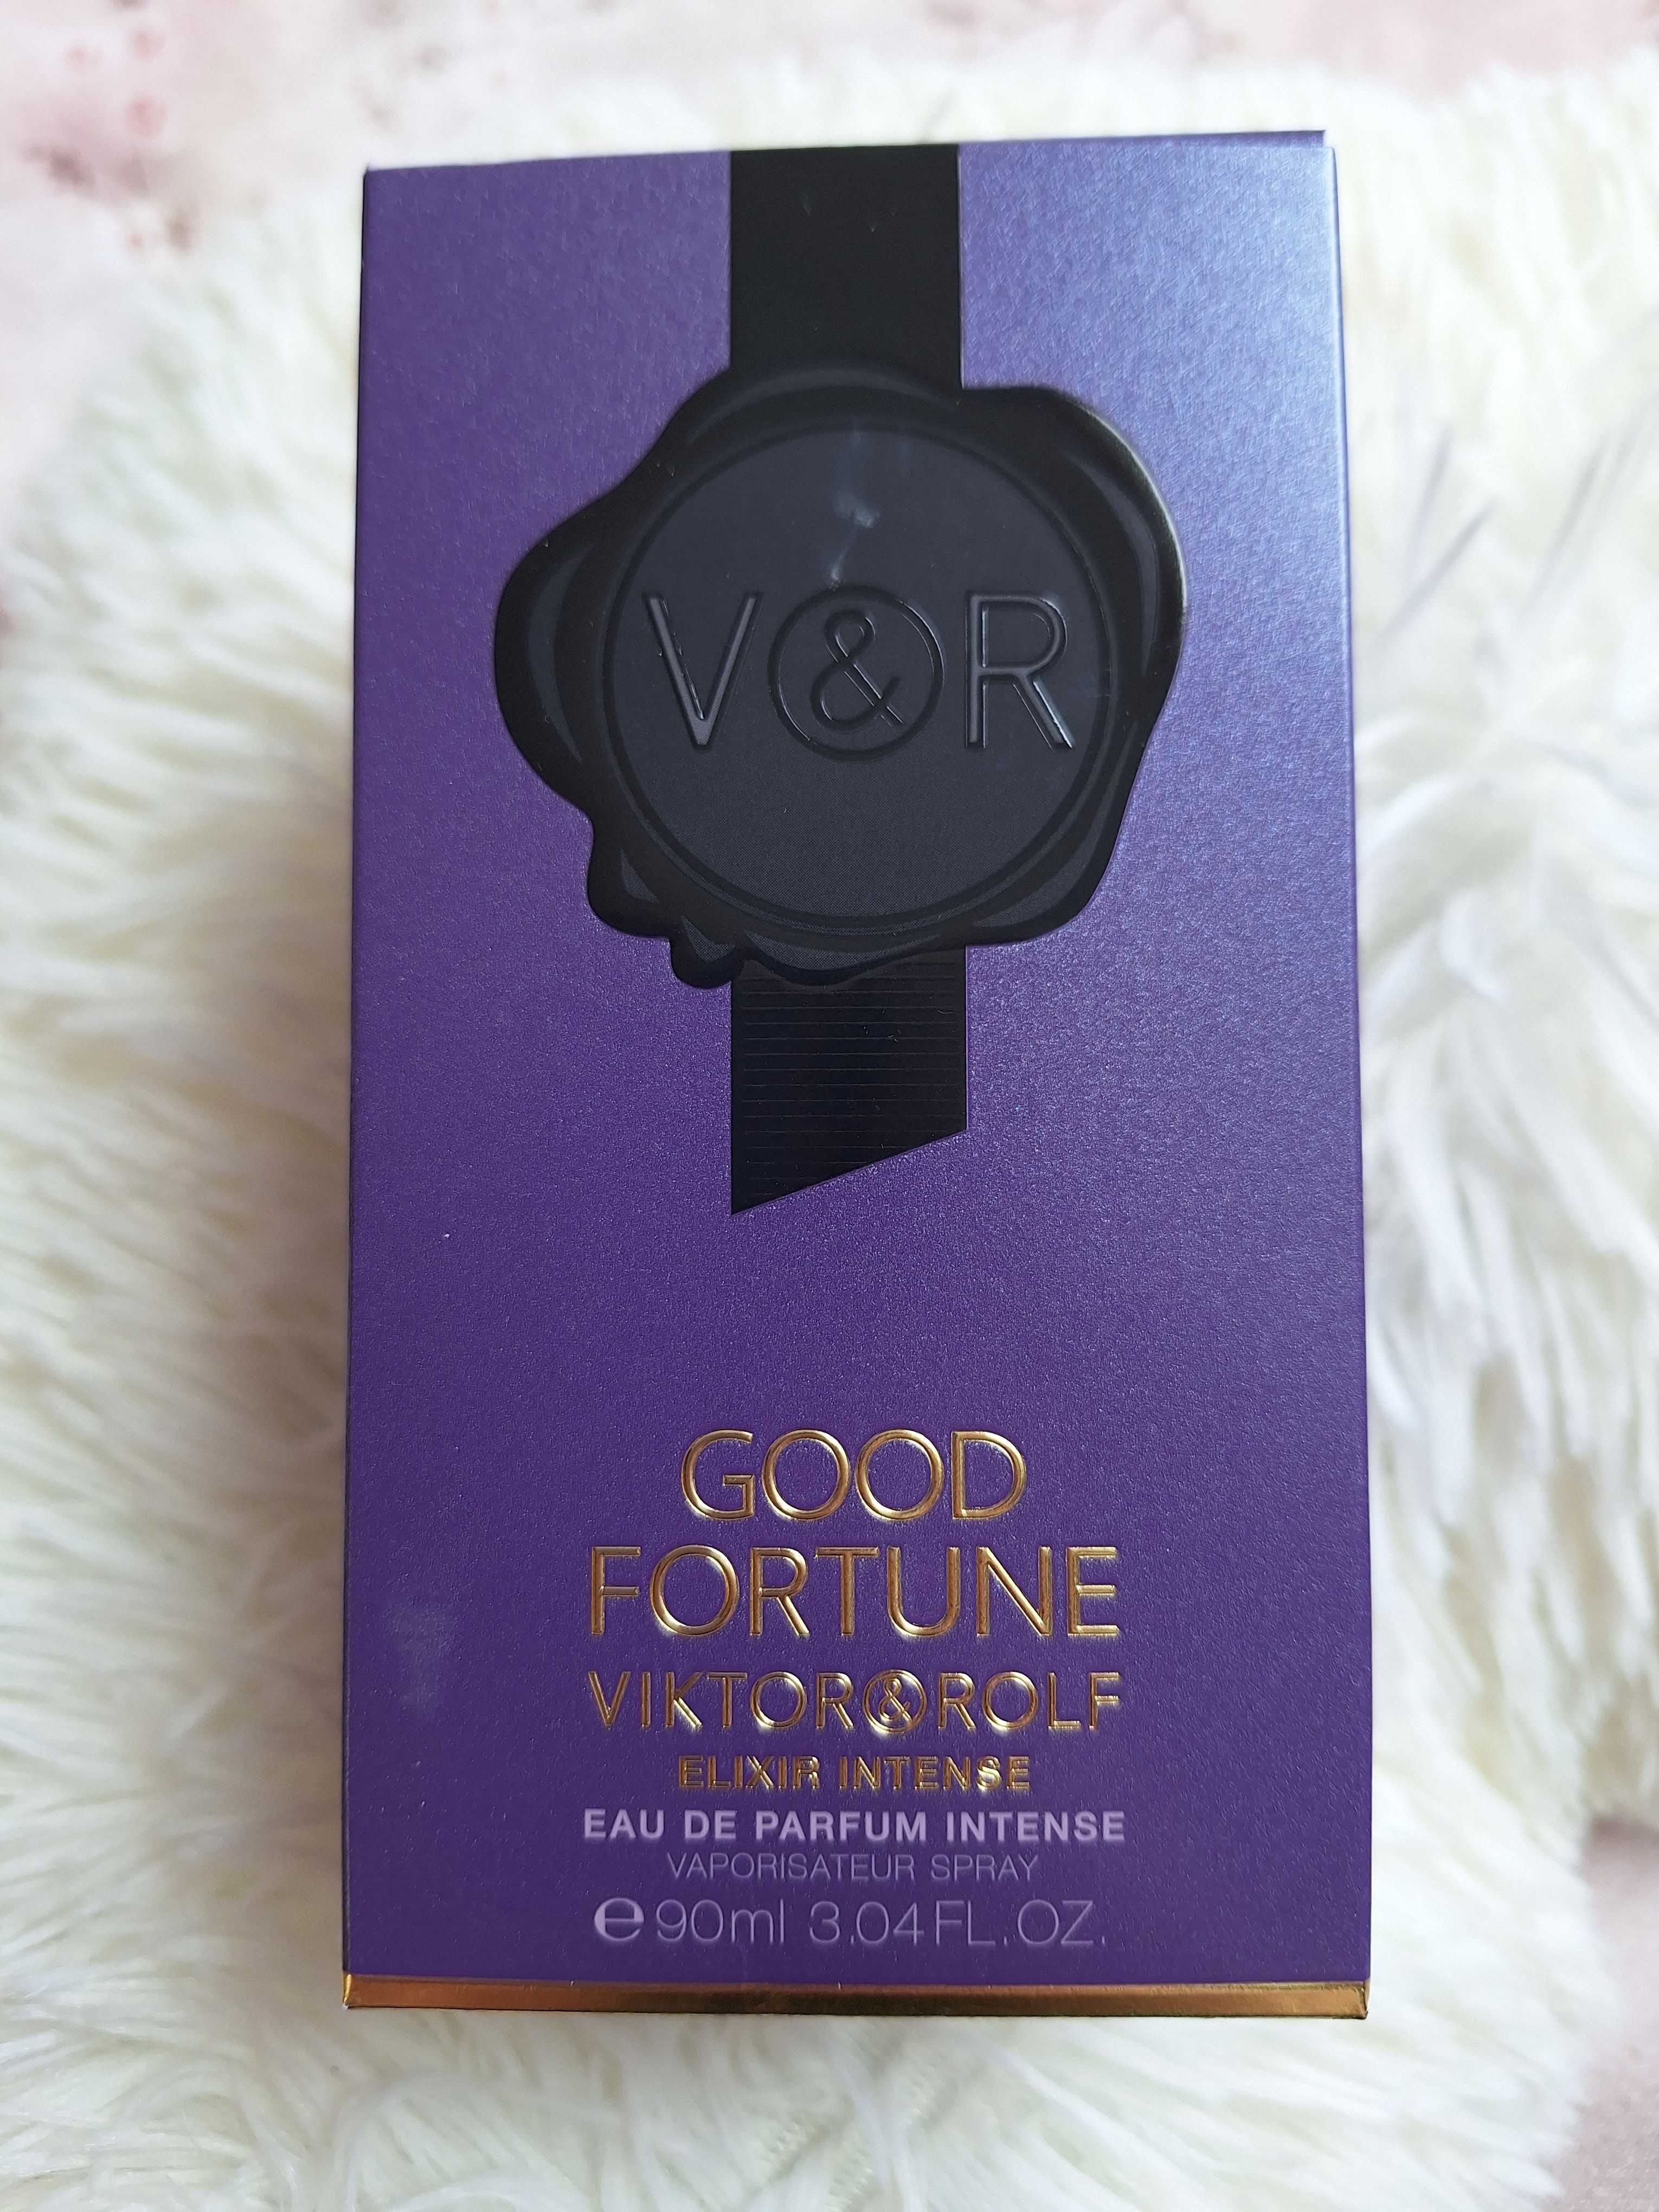 Дамски парфюм Good Fortune, Viktor & Rolf Elixir Intense 90 ml.